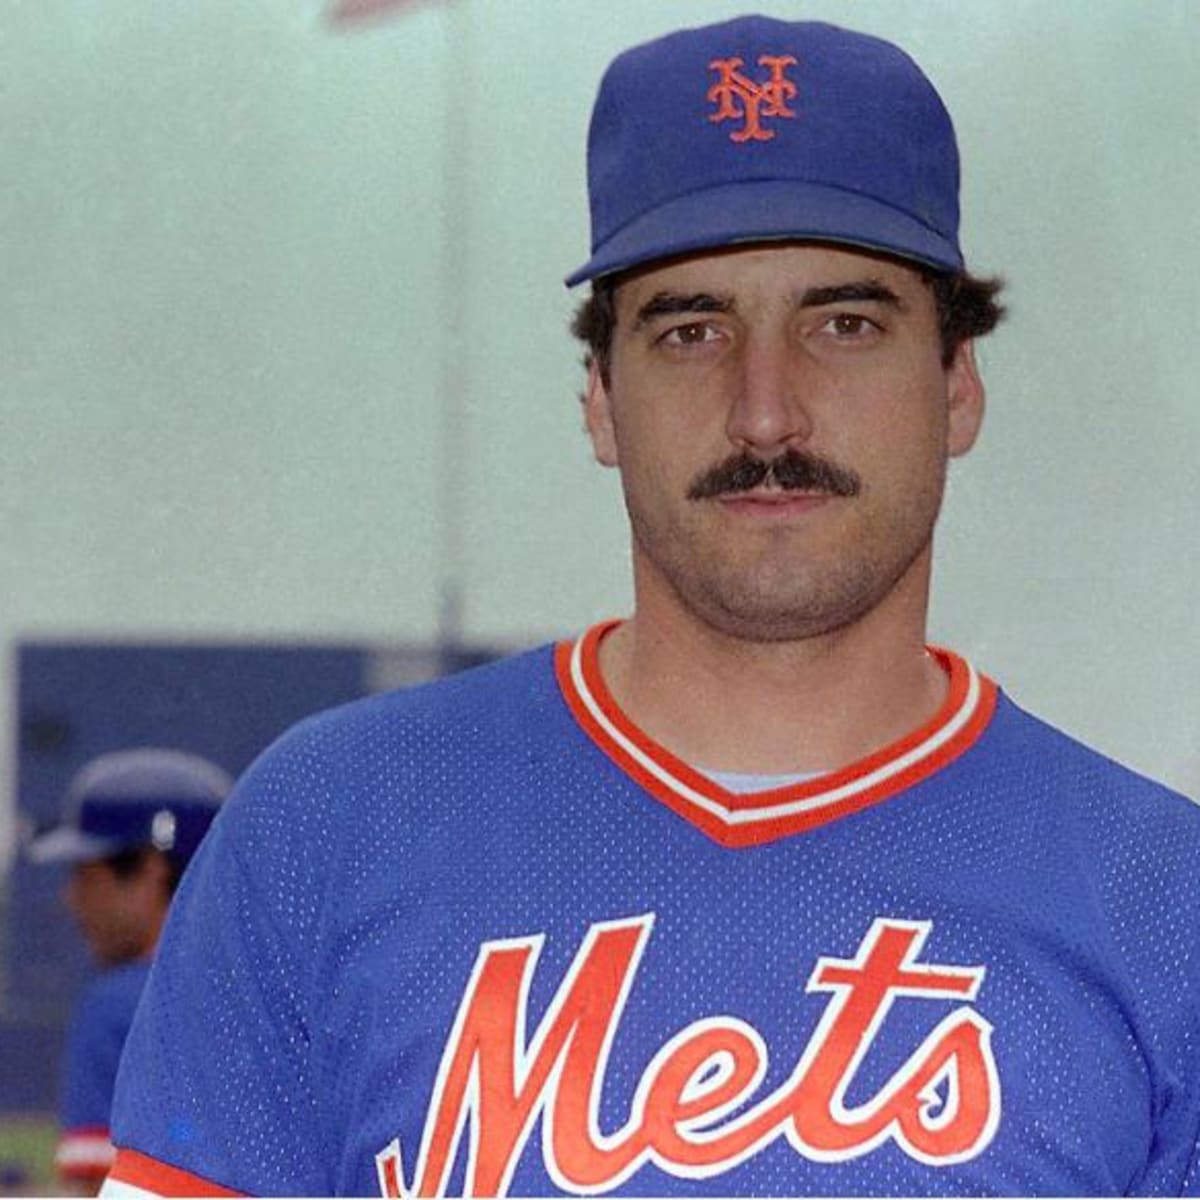 Official Keith Hernandez New York Mets Jerseys, Mets Keith Hernandez  Baseball Jerseys, Uniforms